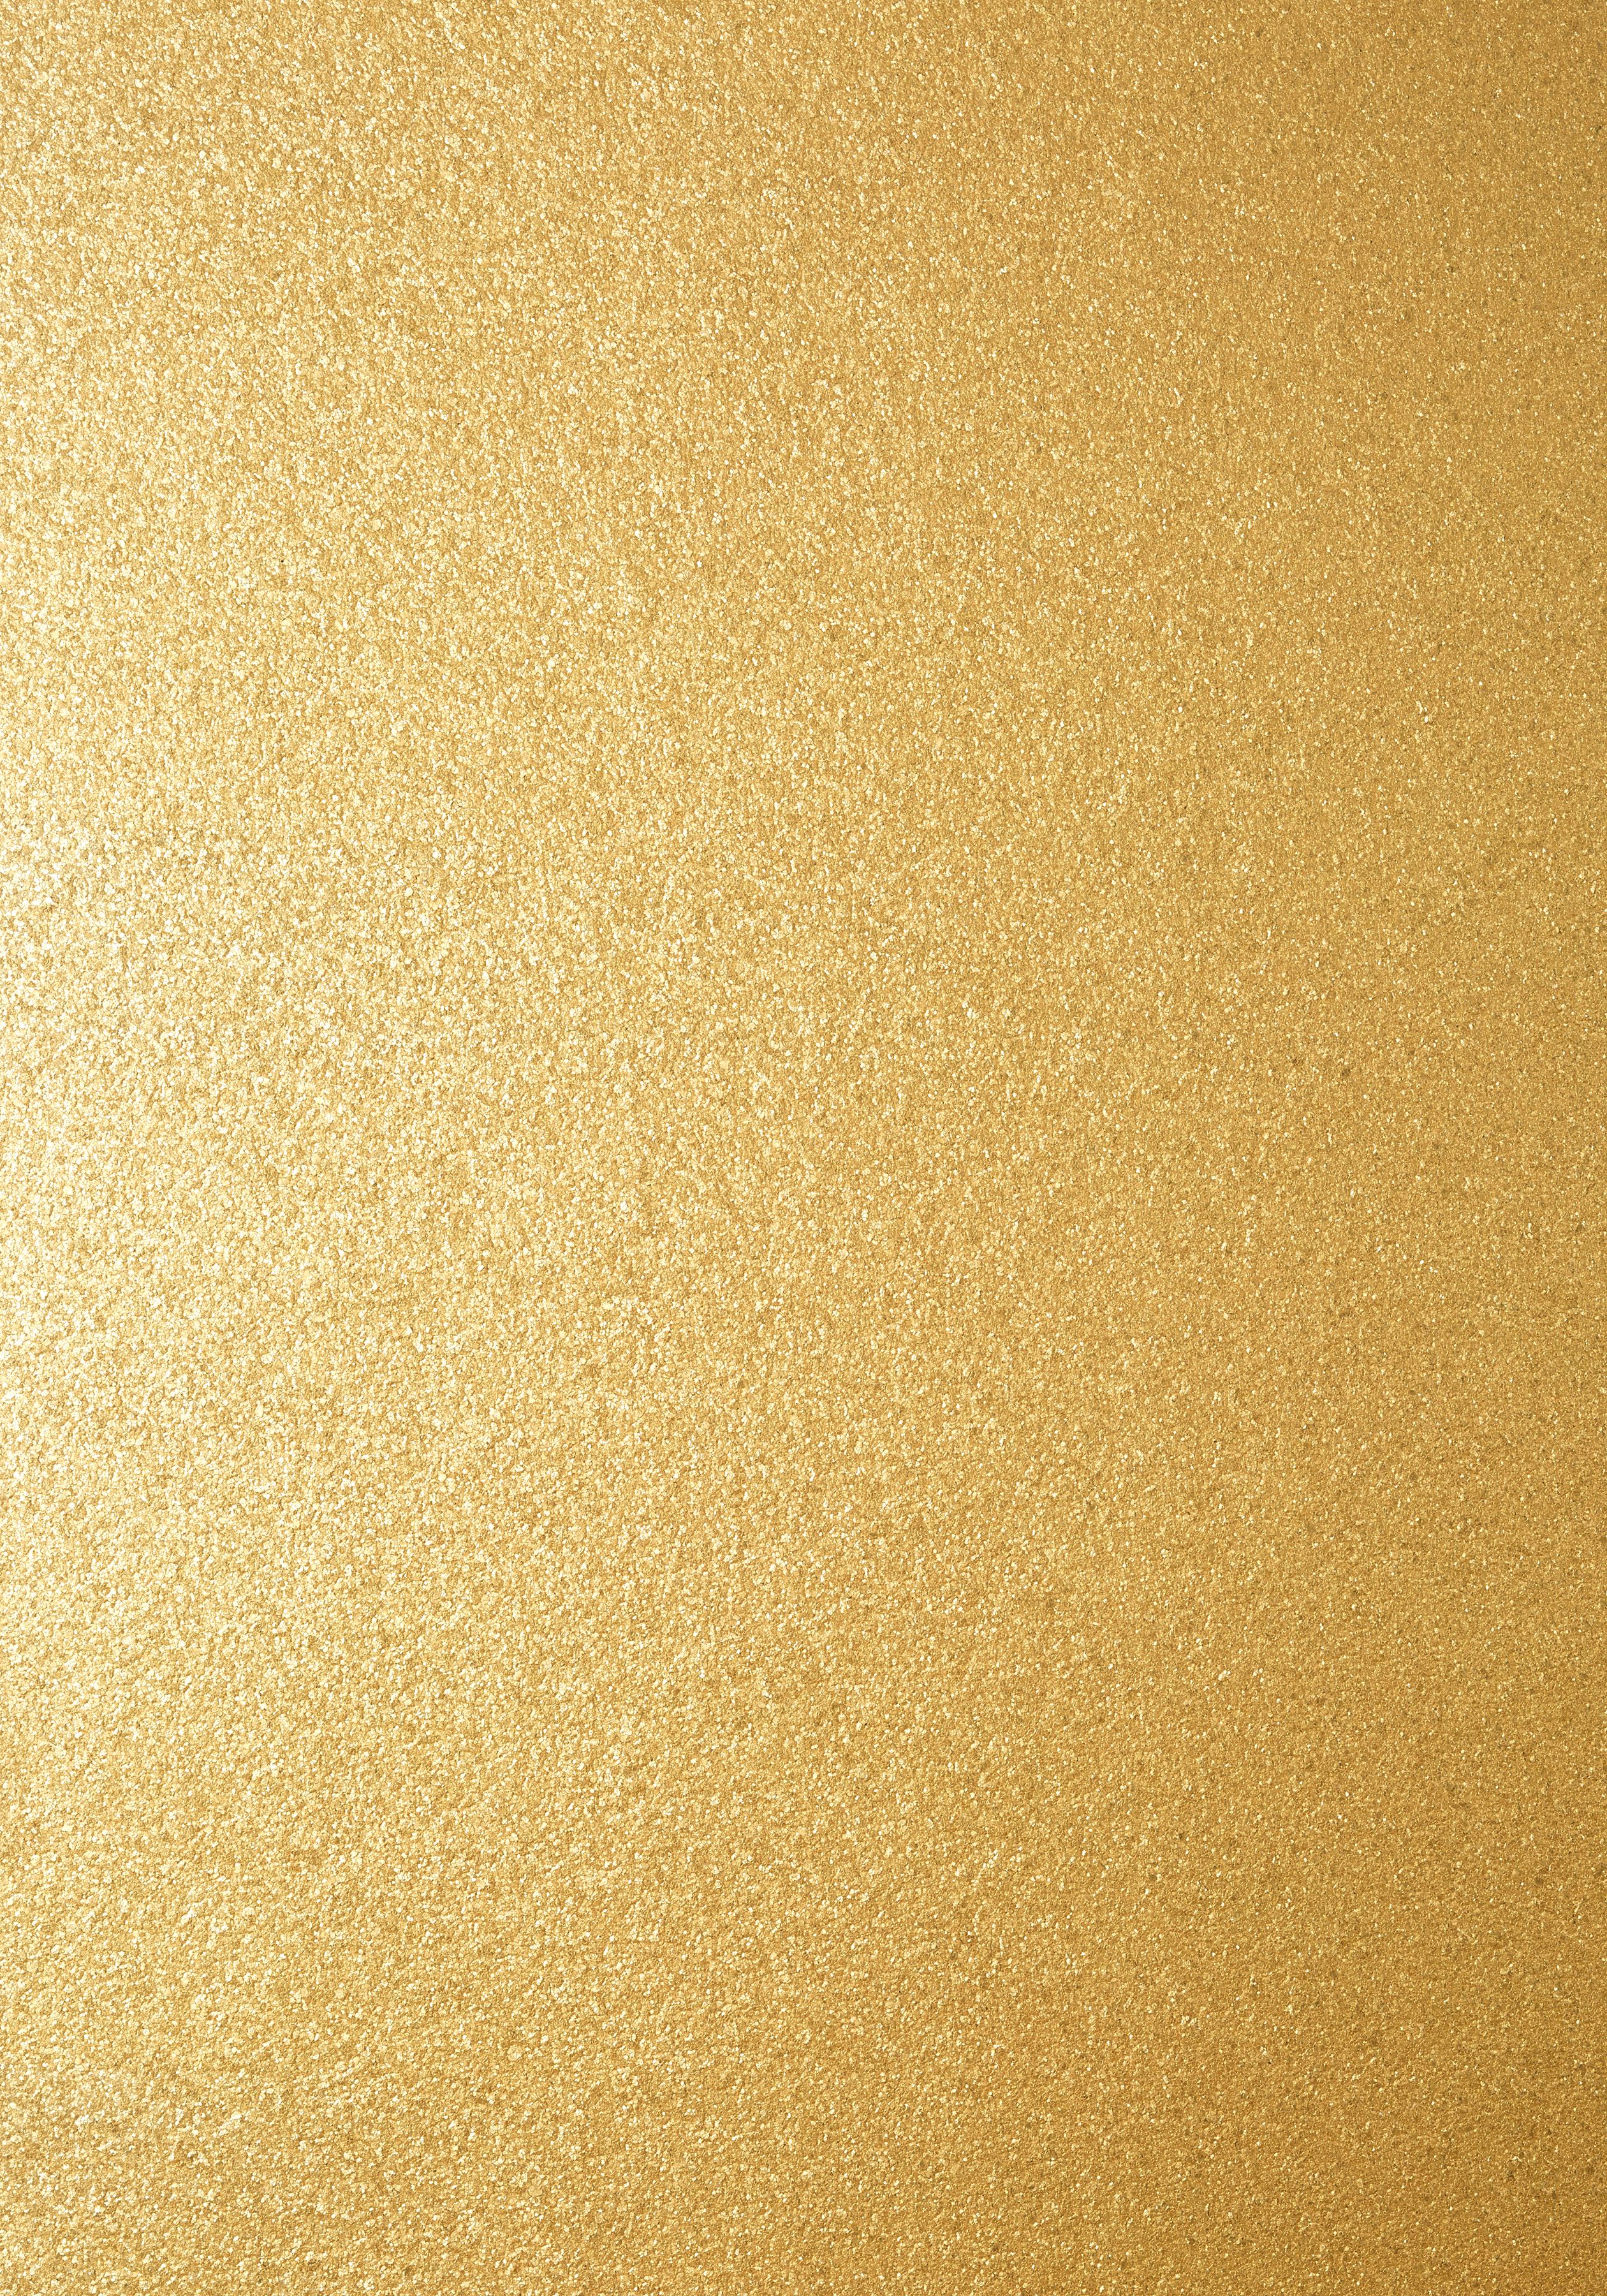 metallic gold wallpaper,beige,brown,yellow,material property,wallpaper